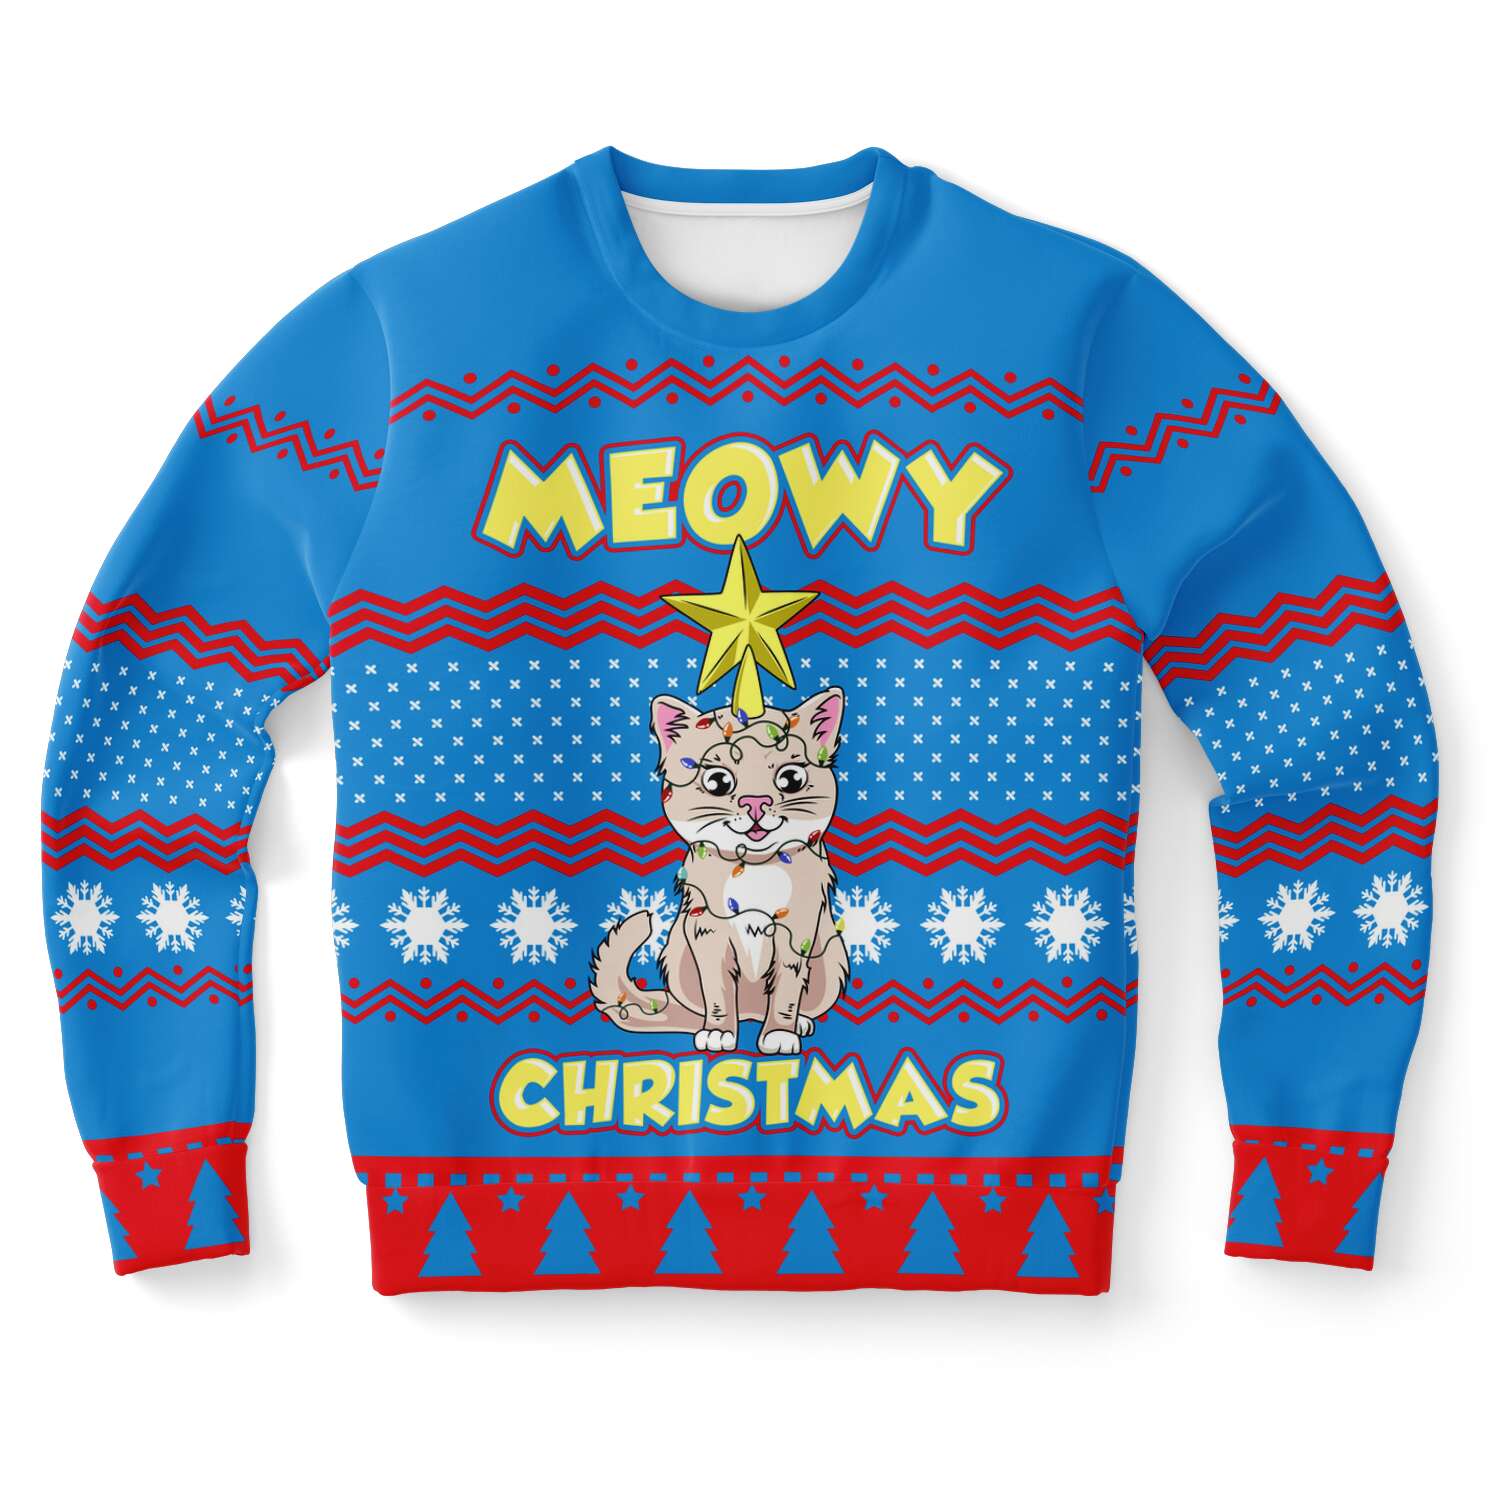 Meowy Christmas Ugly Christmas Sweater - Rave bonfire